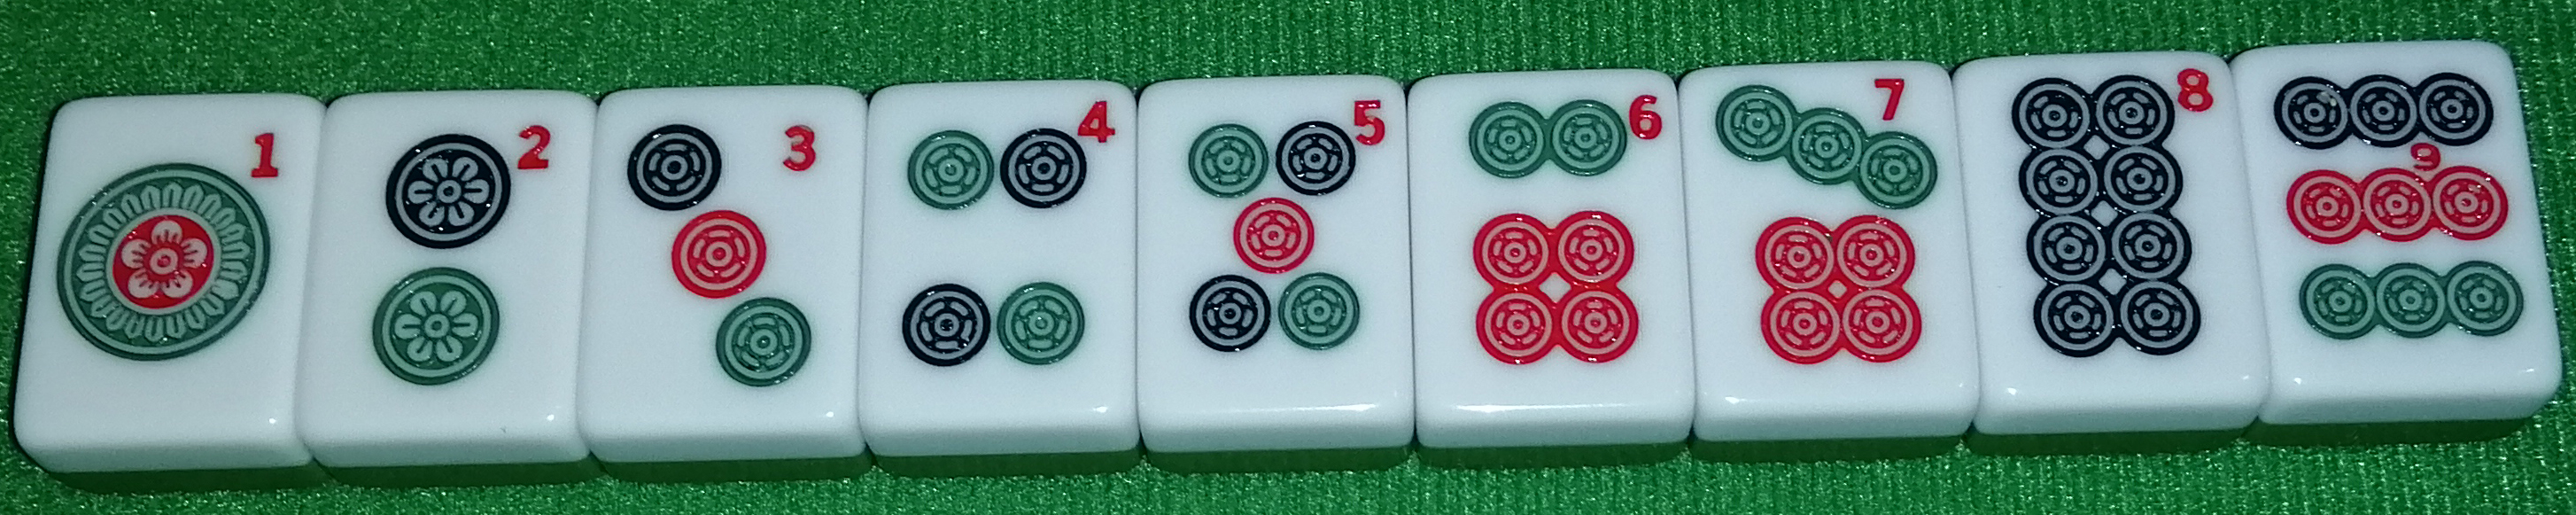 Nine pin tiles, numbered one through nine.